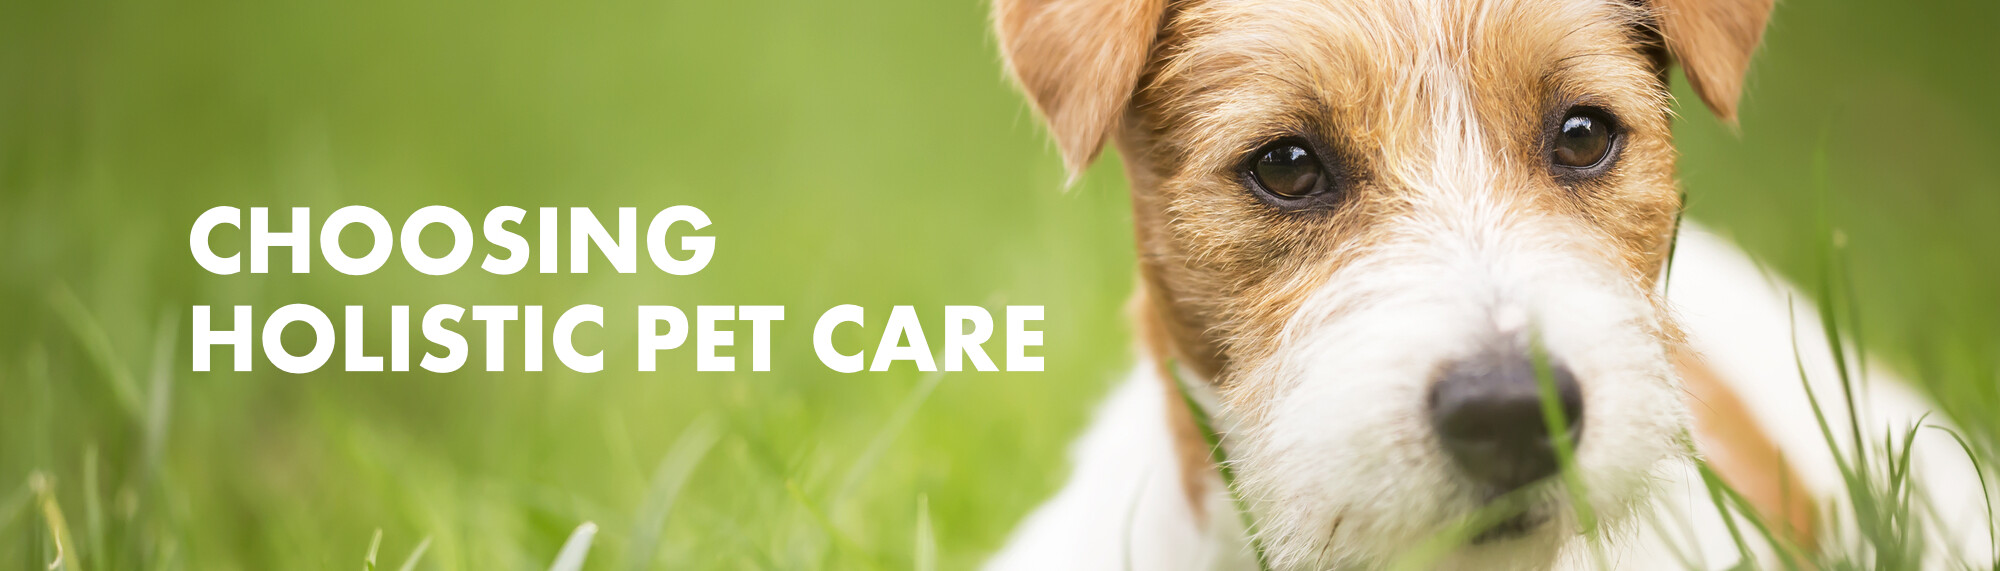 Choosing Holistic Pet Care